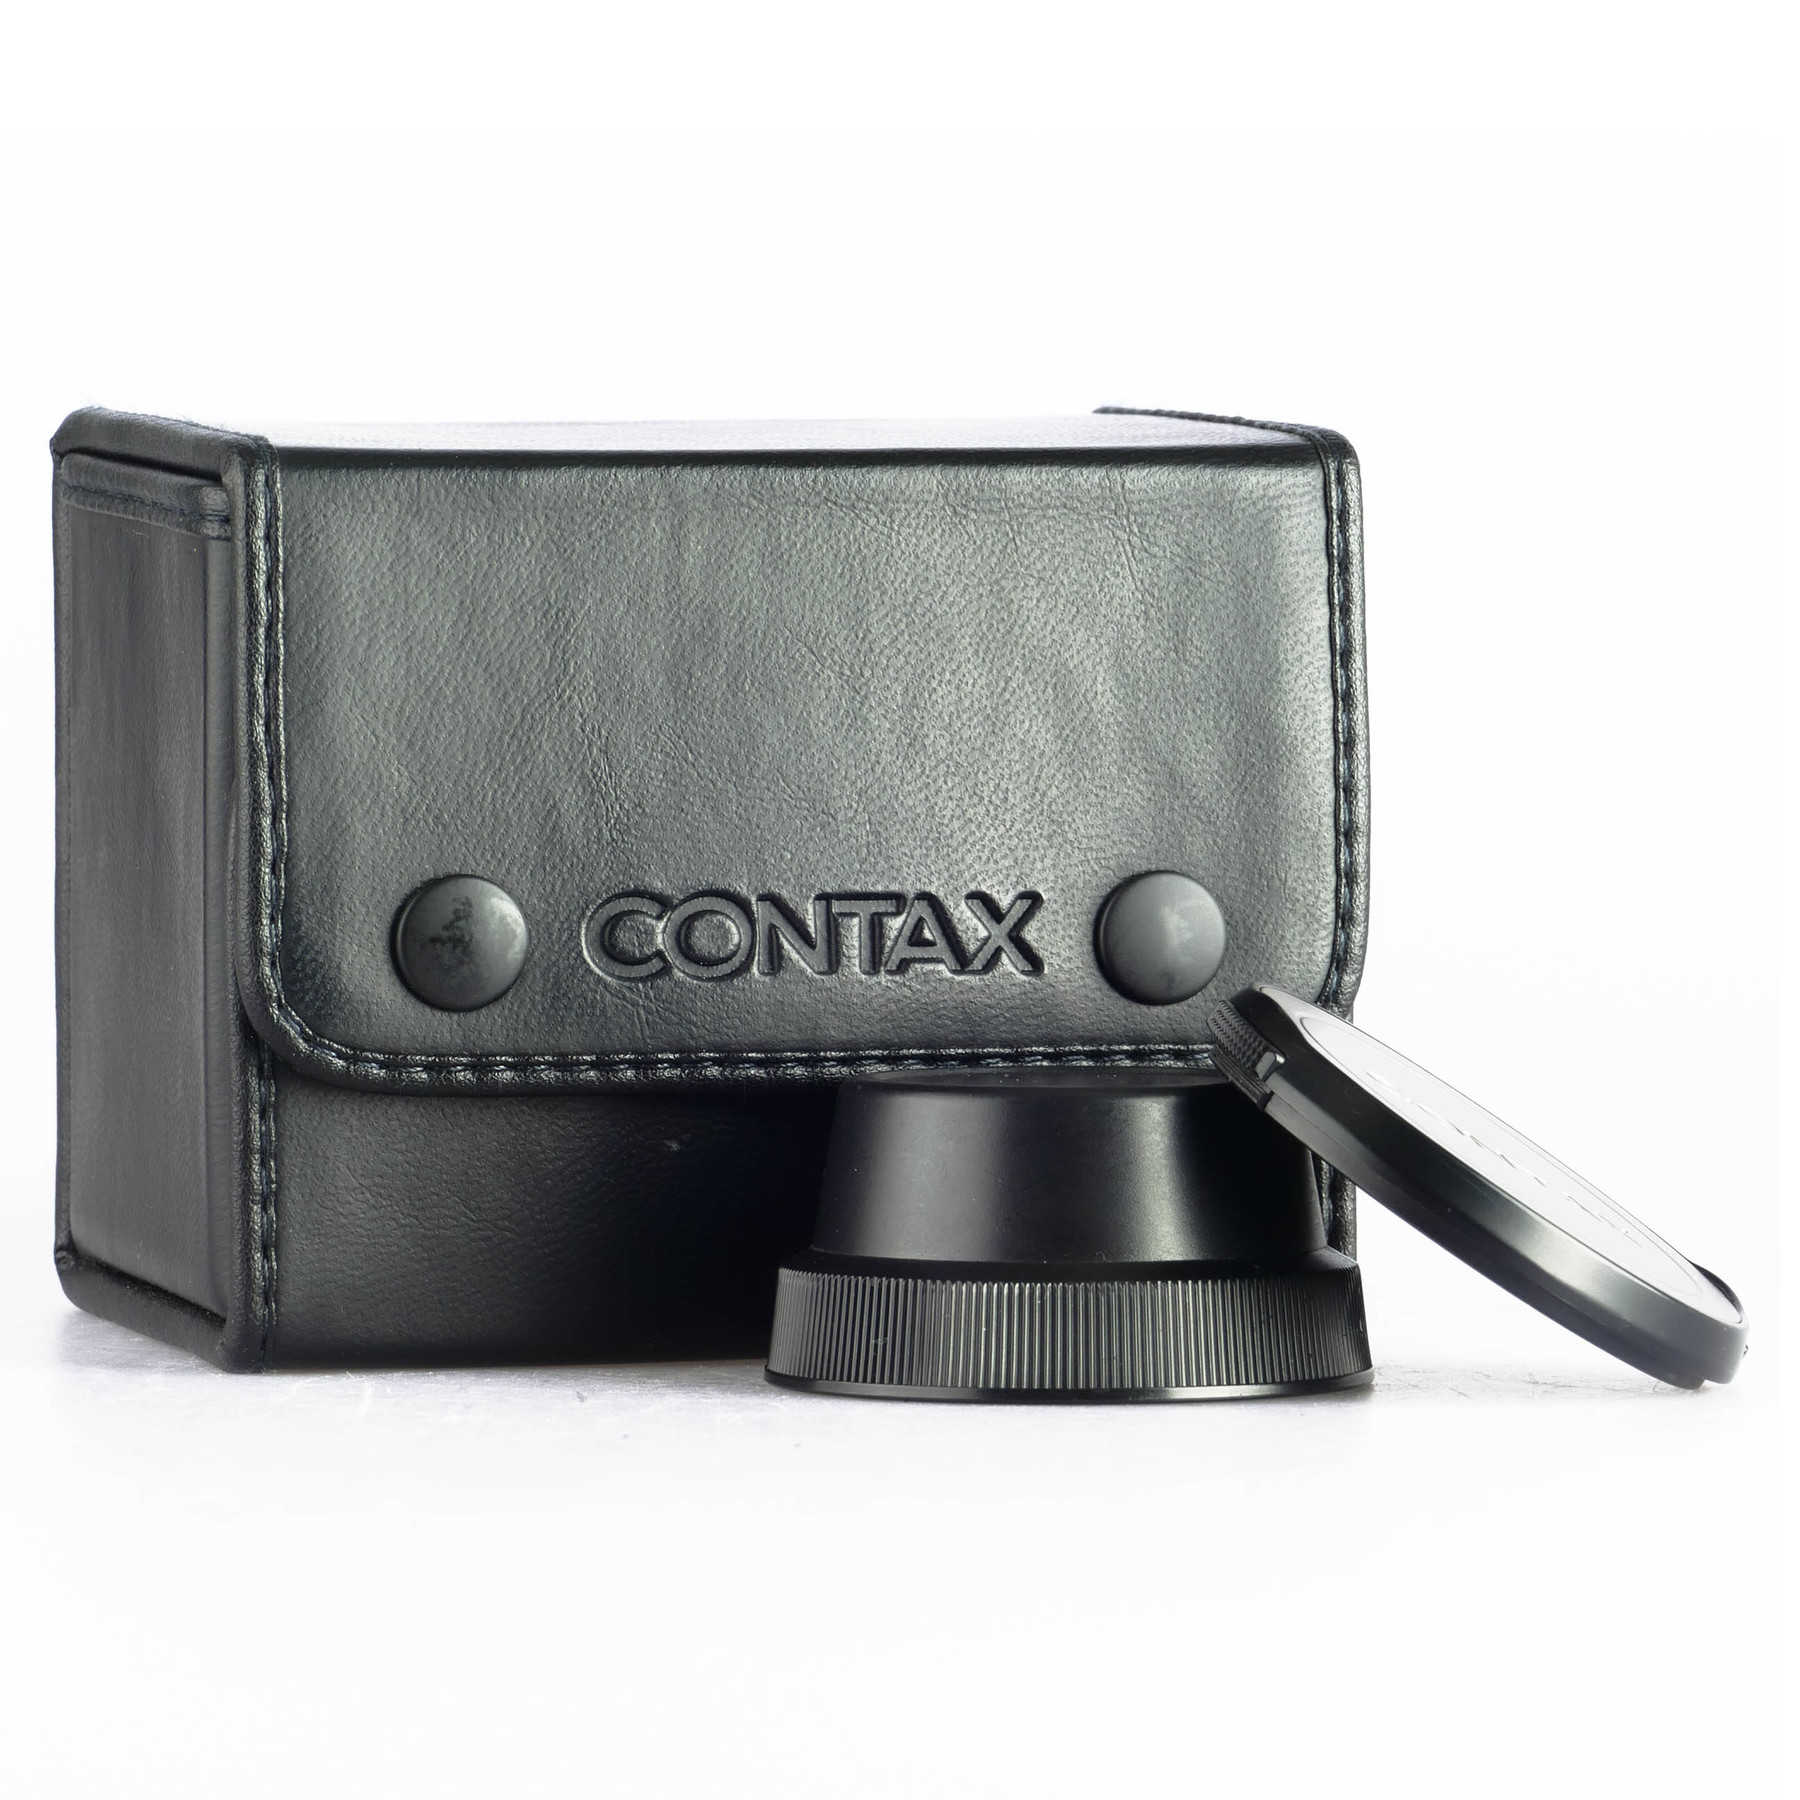 Contax Biogon 21mm f/2.8 T*